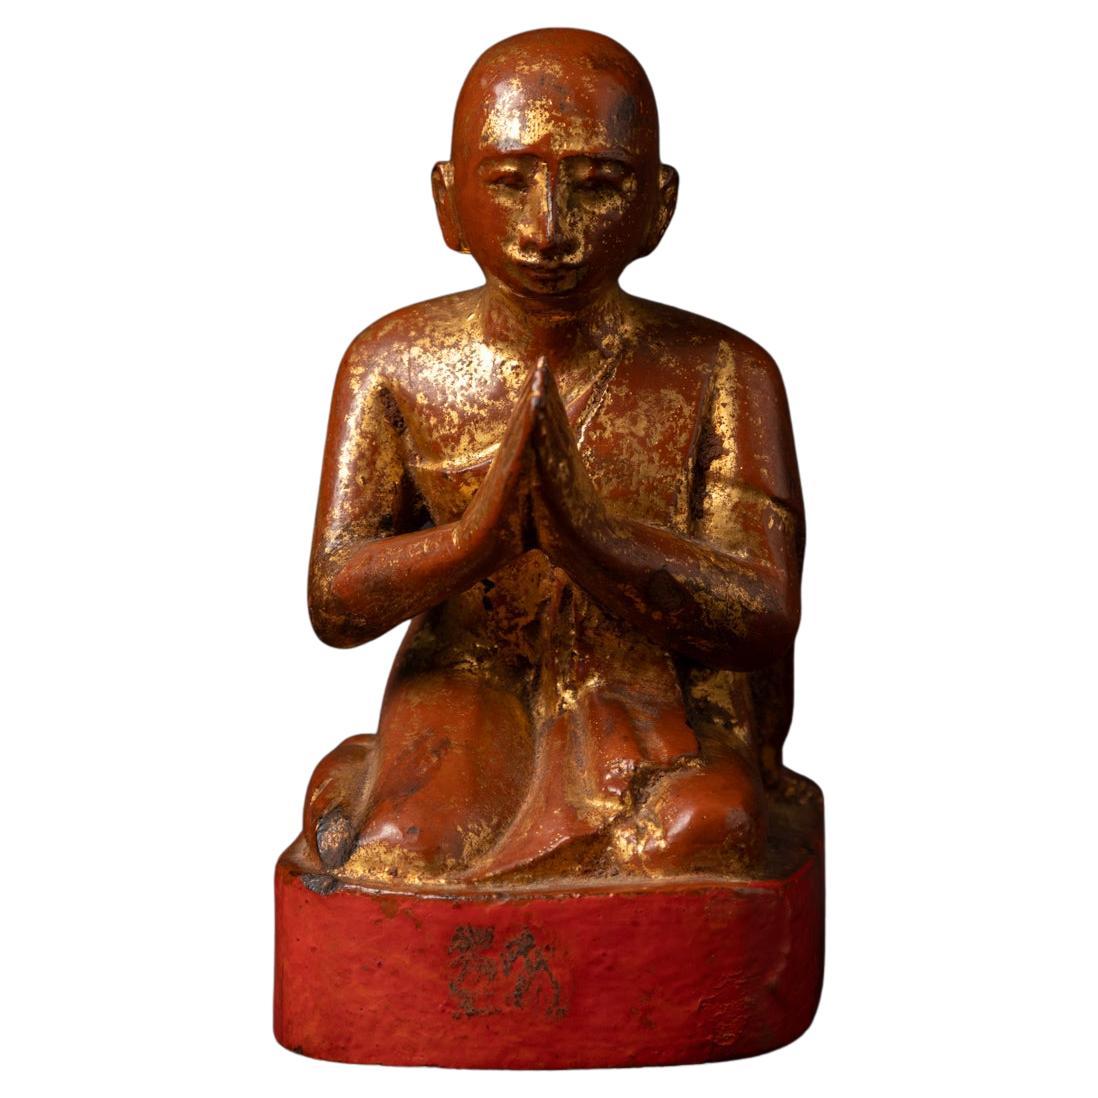 19th century Antique wooden Burmese Monk statue from Burma